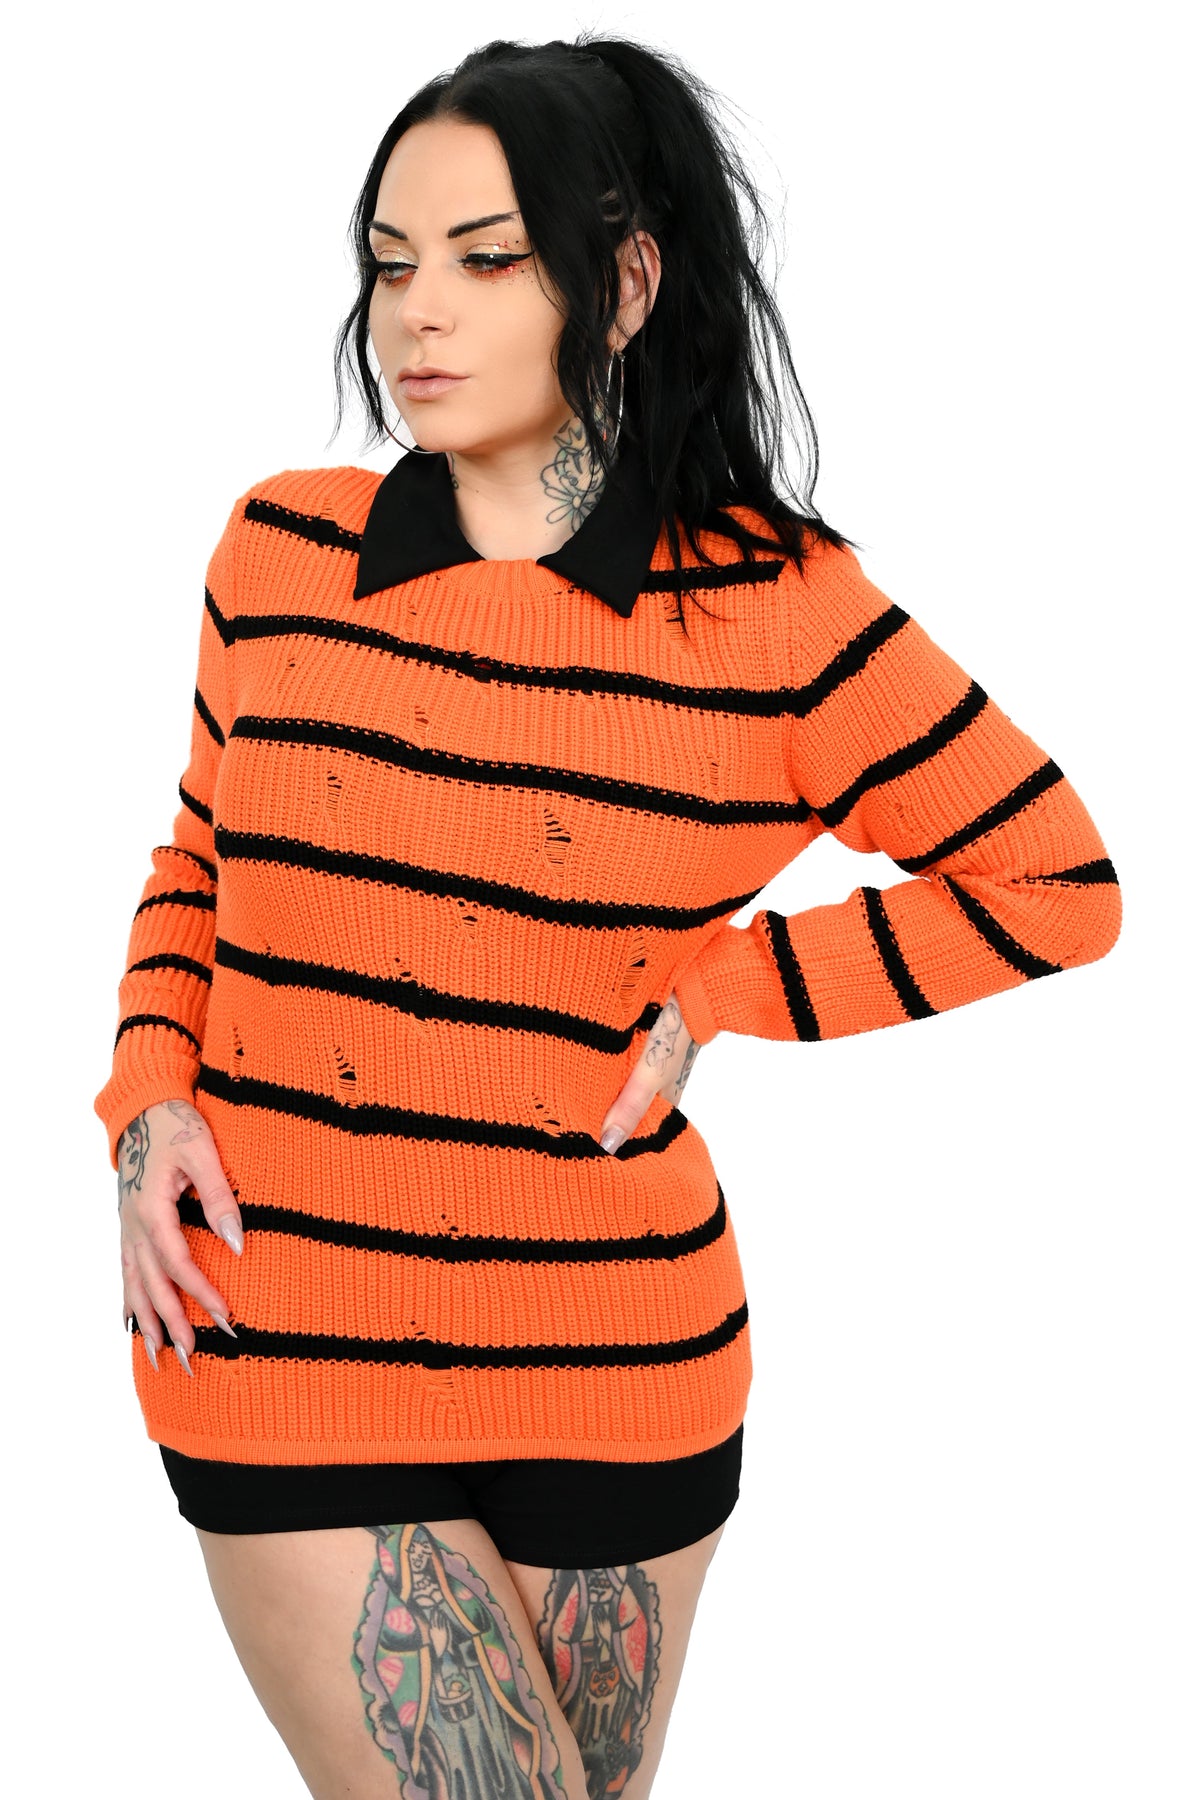 Sam Striped Sweater - XS/S left!